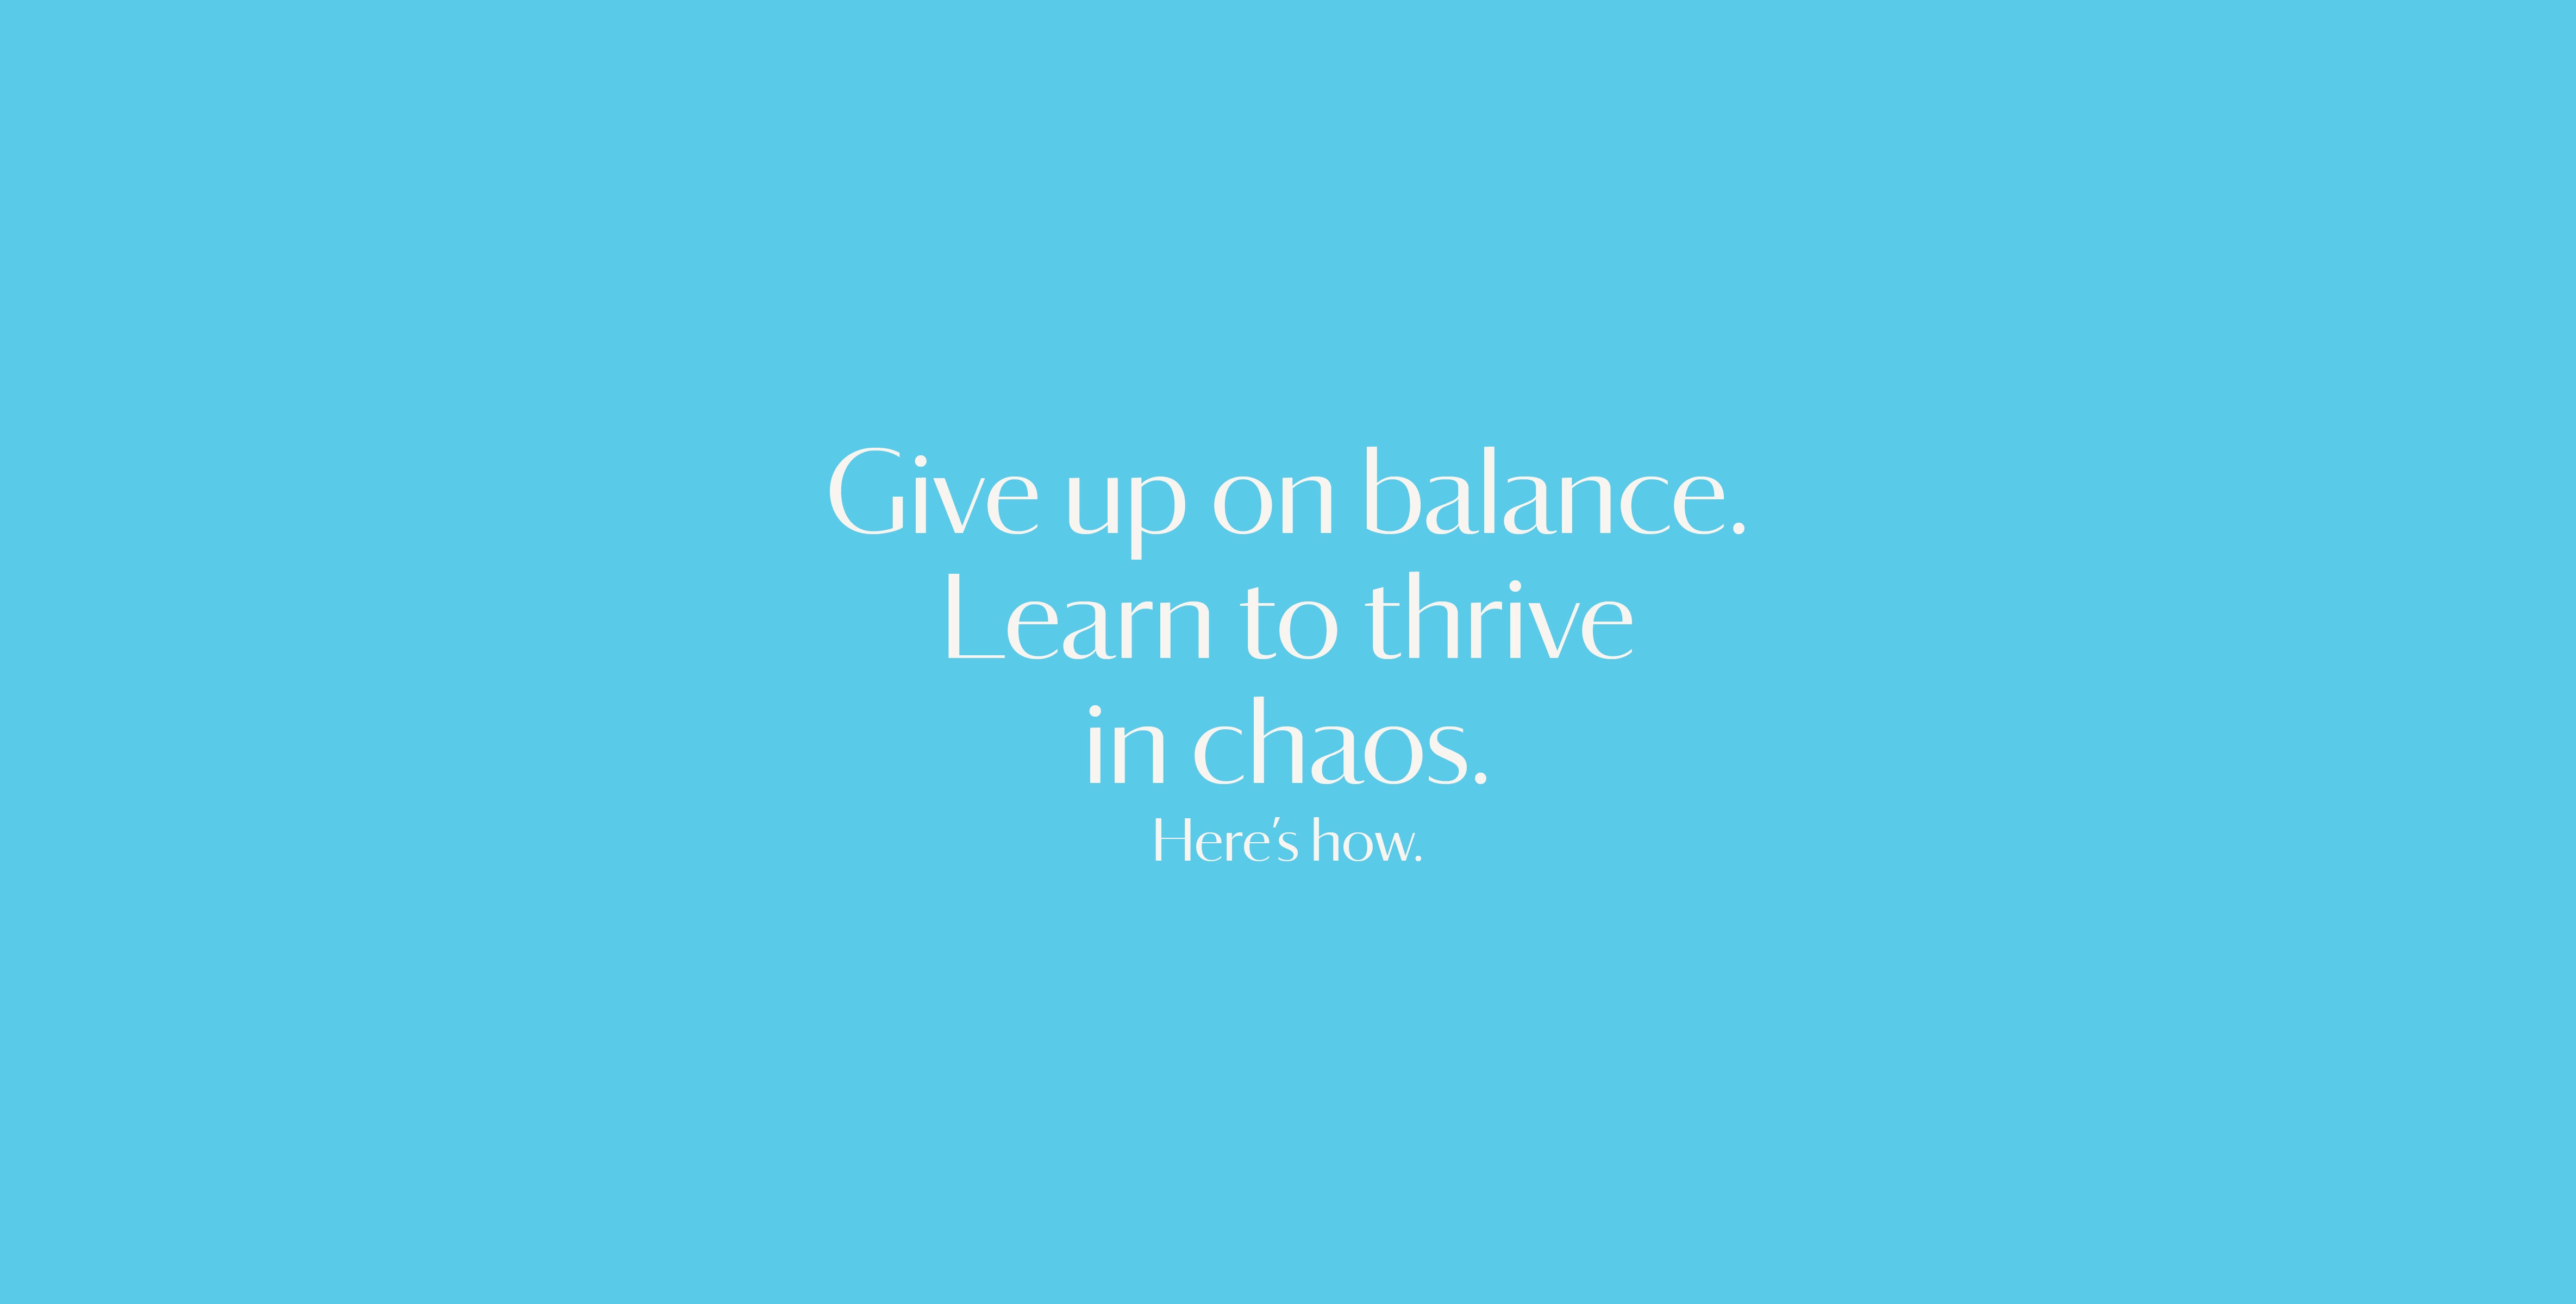 Don't be balanced. Be brilliant.